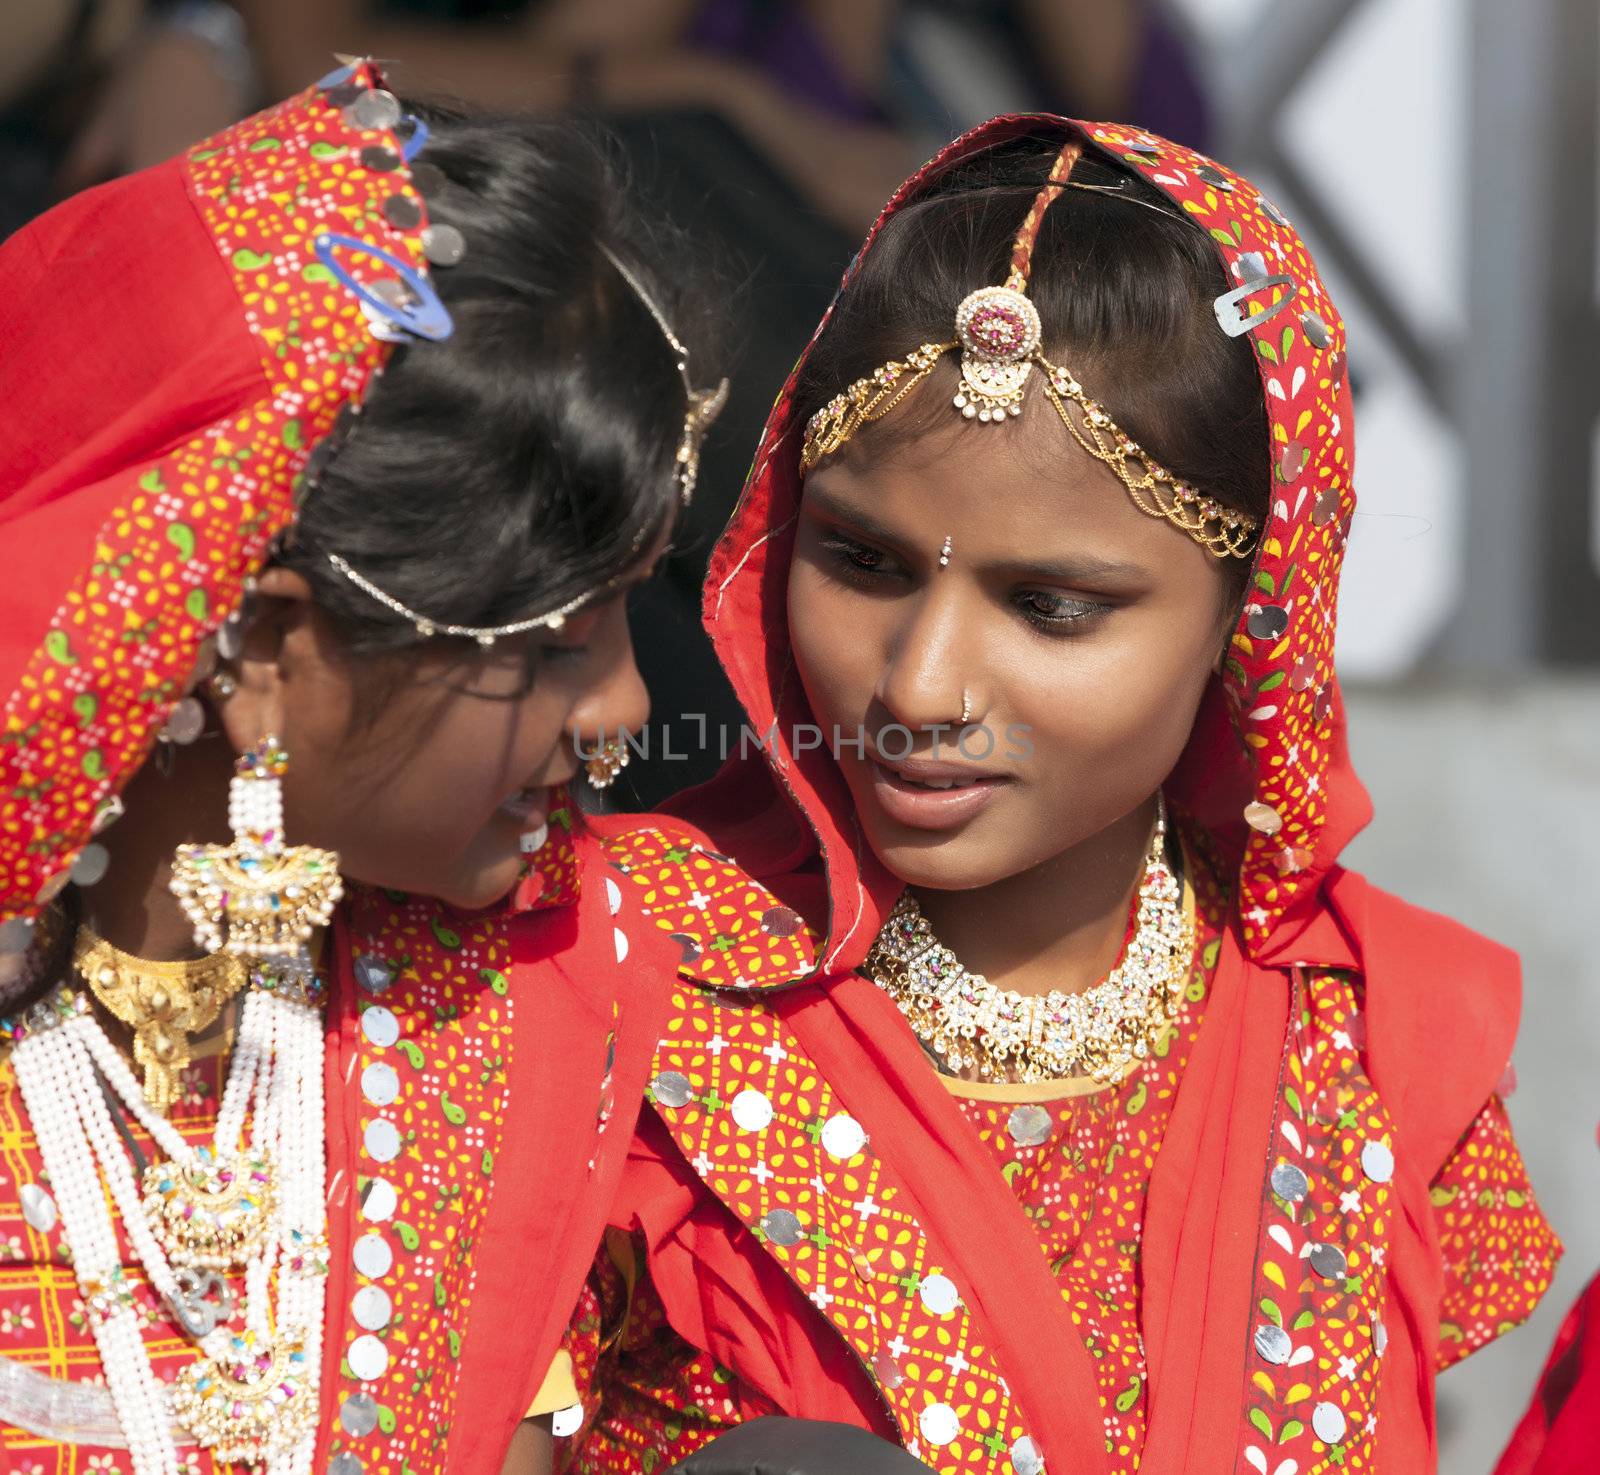 PUSHKAR, INDIA - NOVEMBER 21:  An unidentified girls in colorful ethnic attire attends at the Pushkar fair on November 21, 2012 in Pushkar, Rajasthan, India.